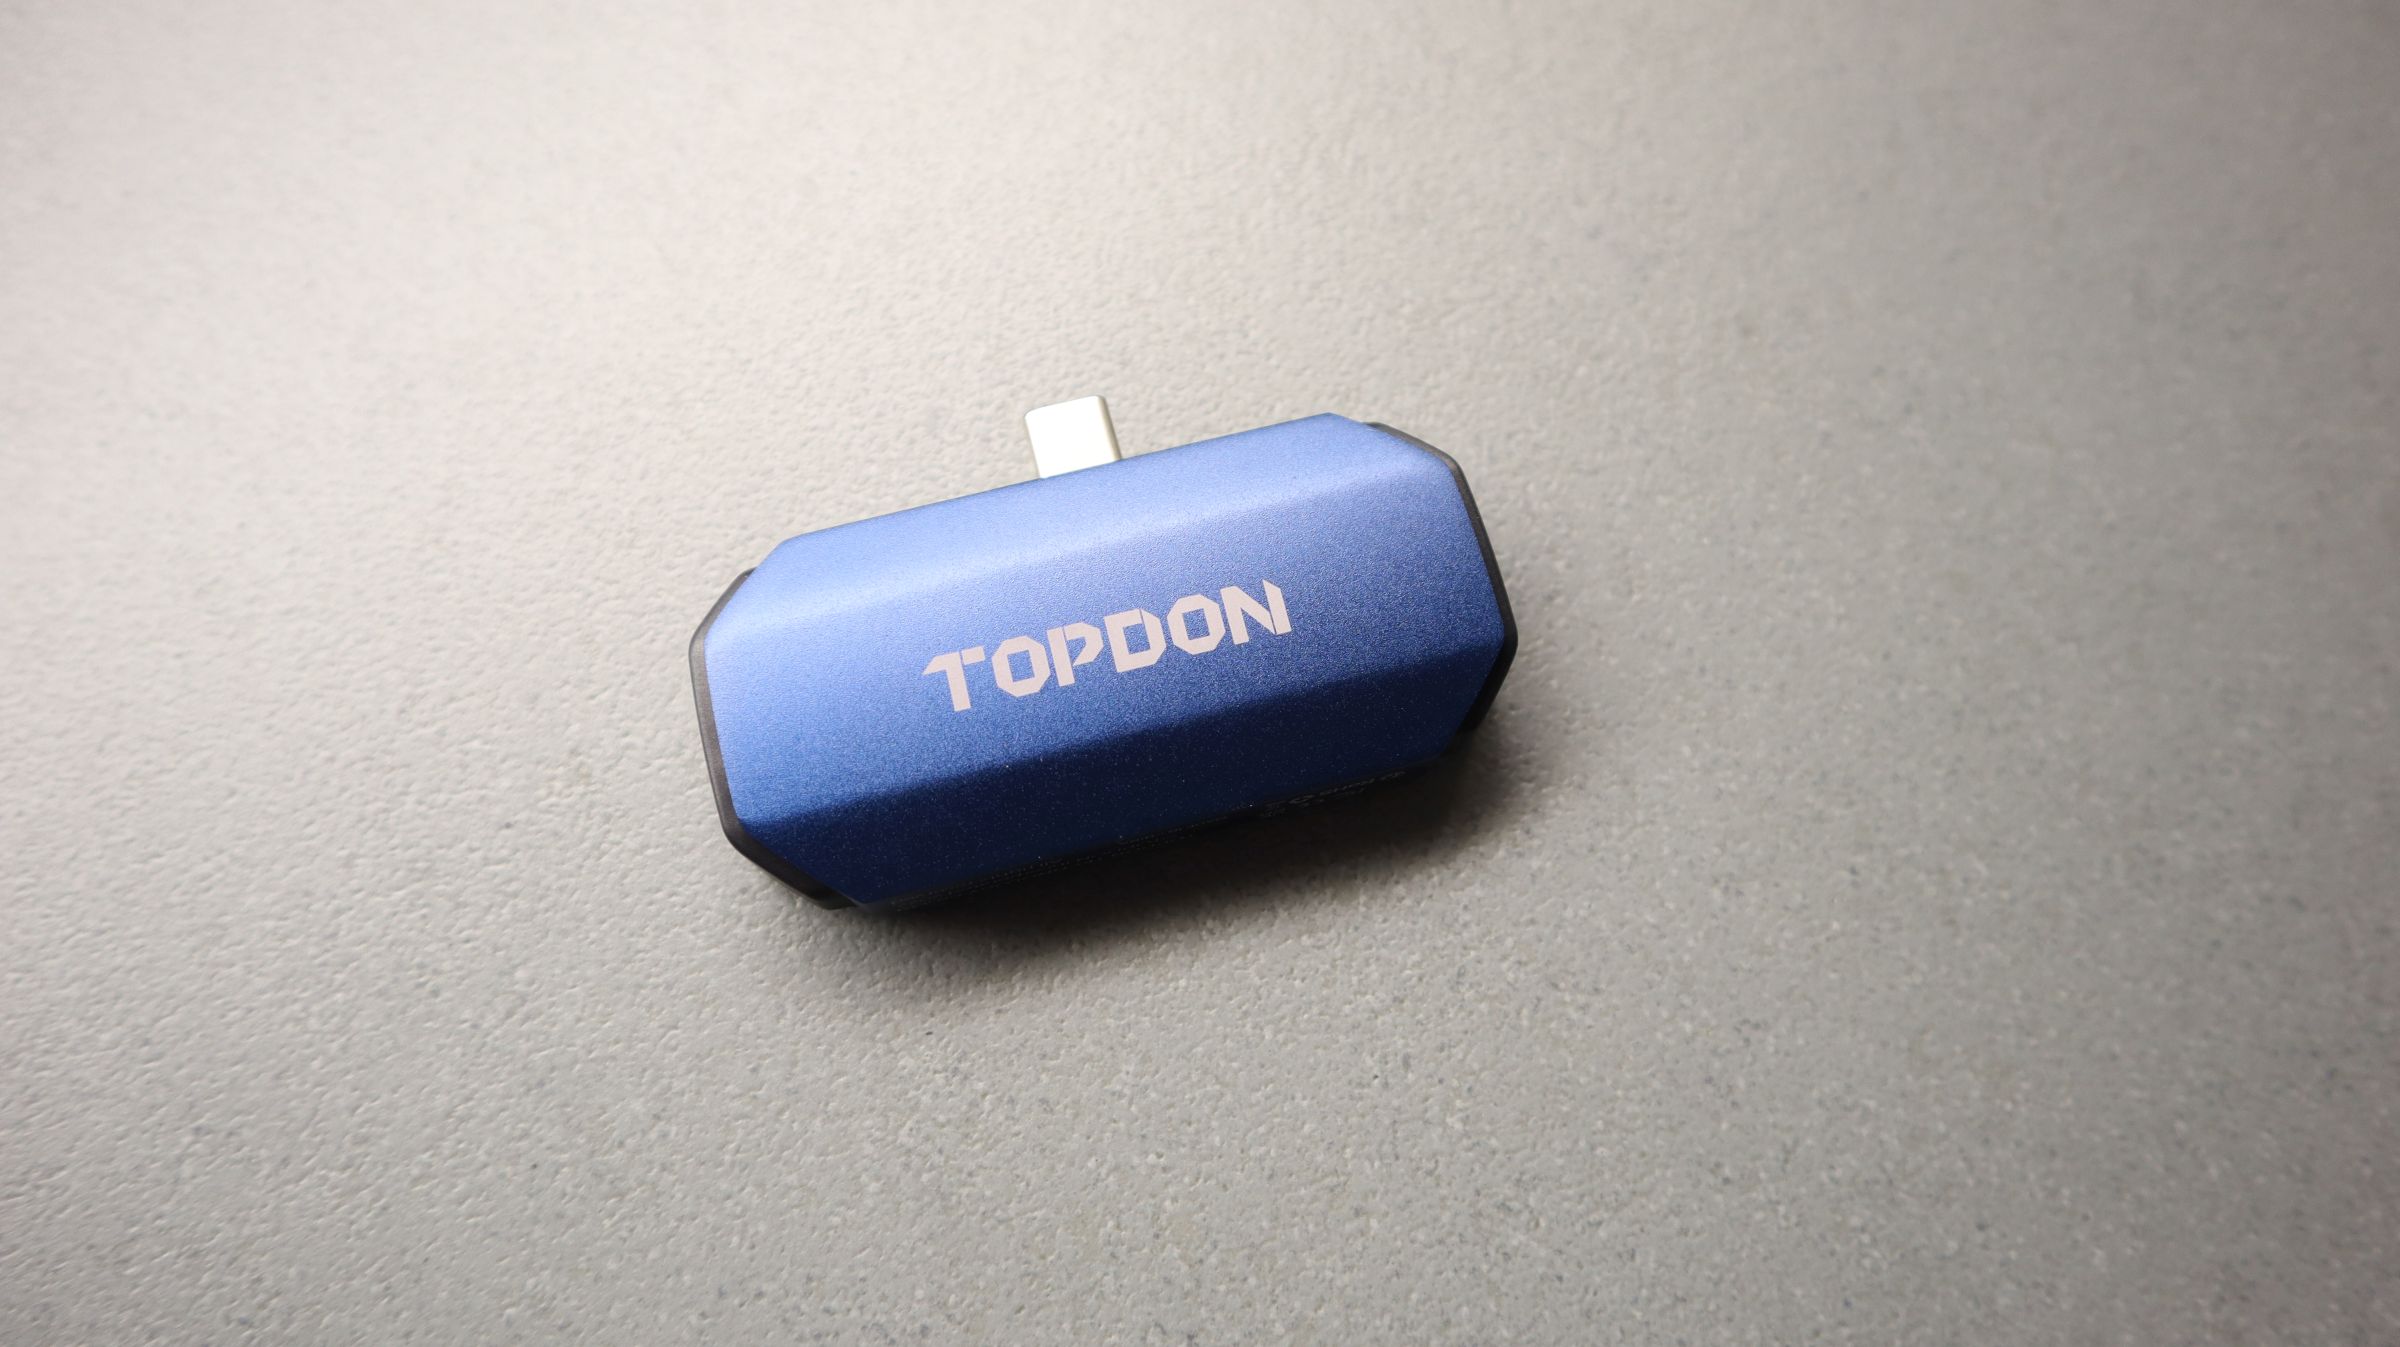 TOPDON TC001, Unboxing